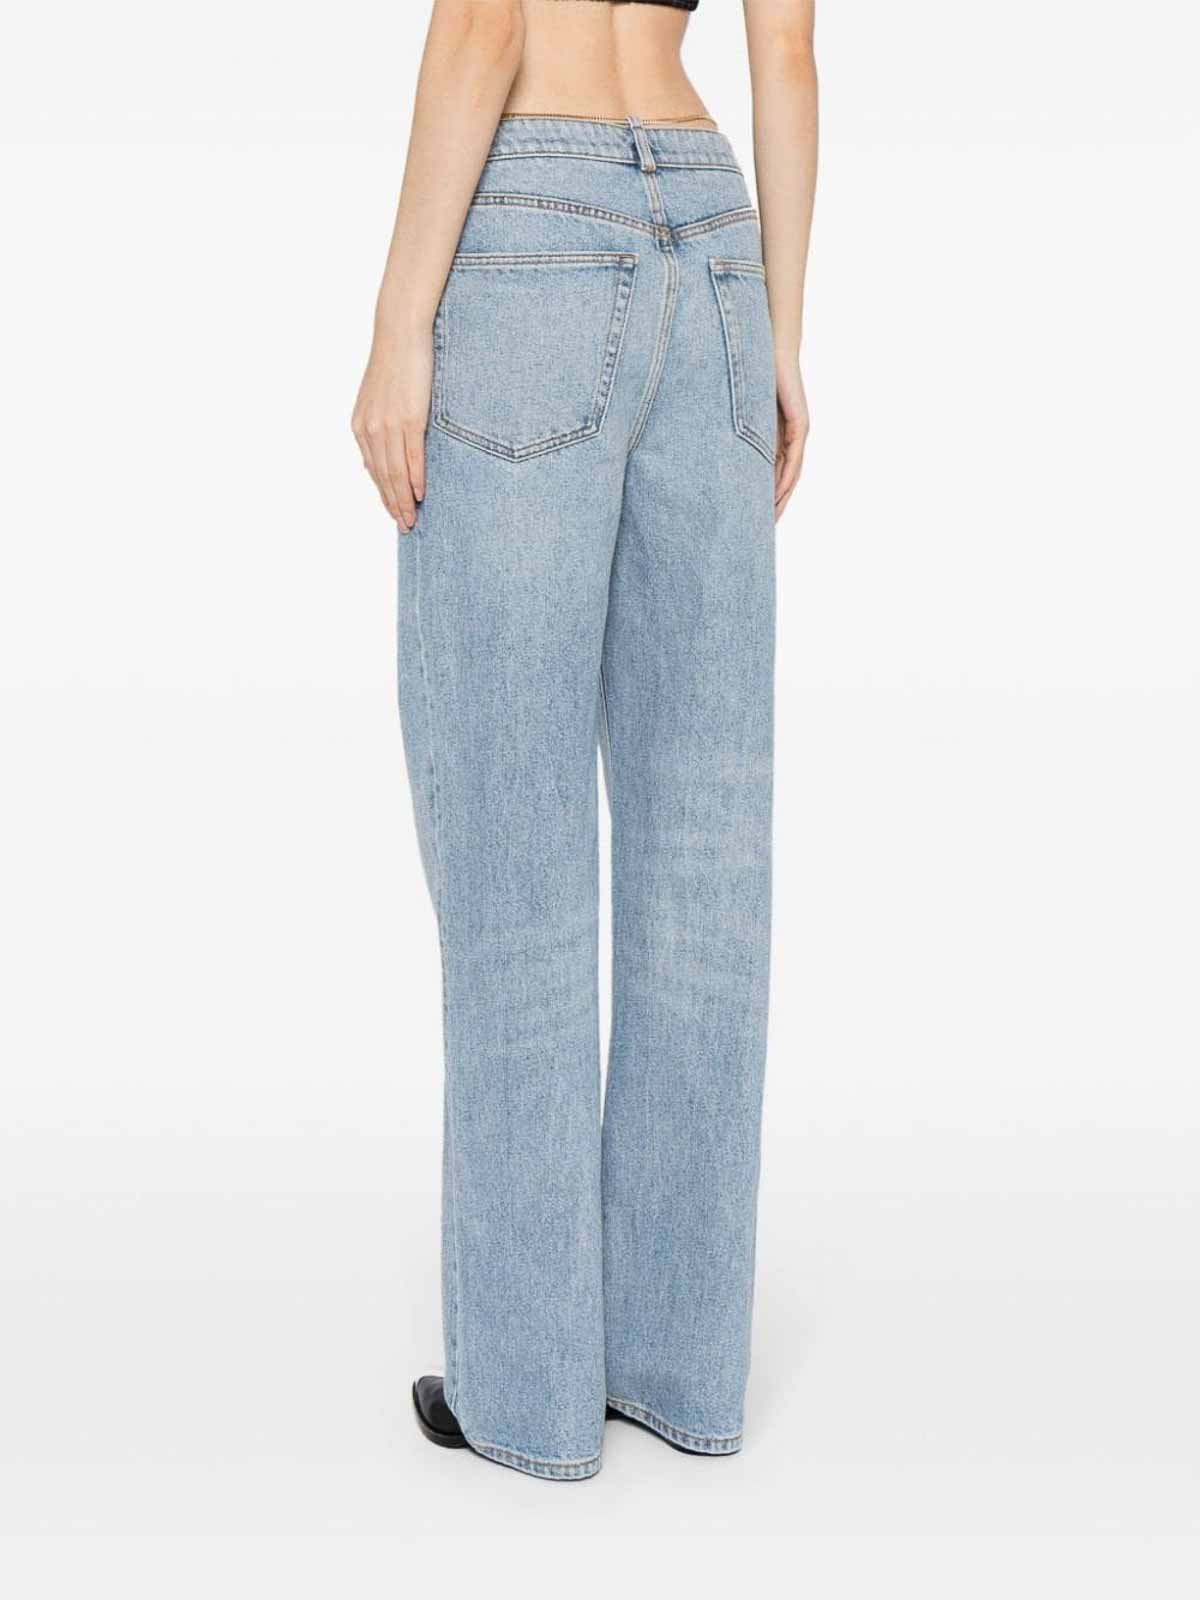 Denim X Alexander Wang Jeans Size 29 | eBay